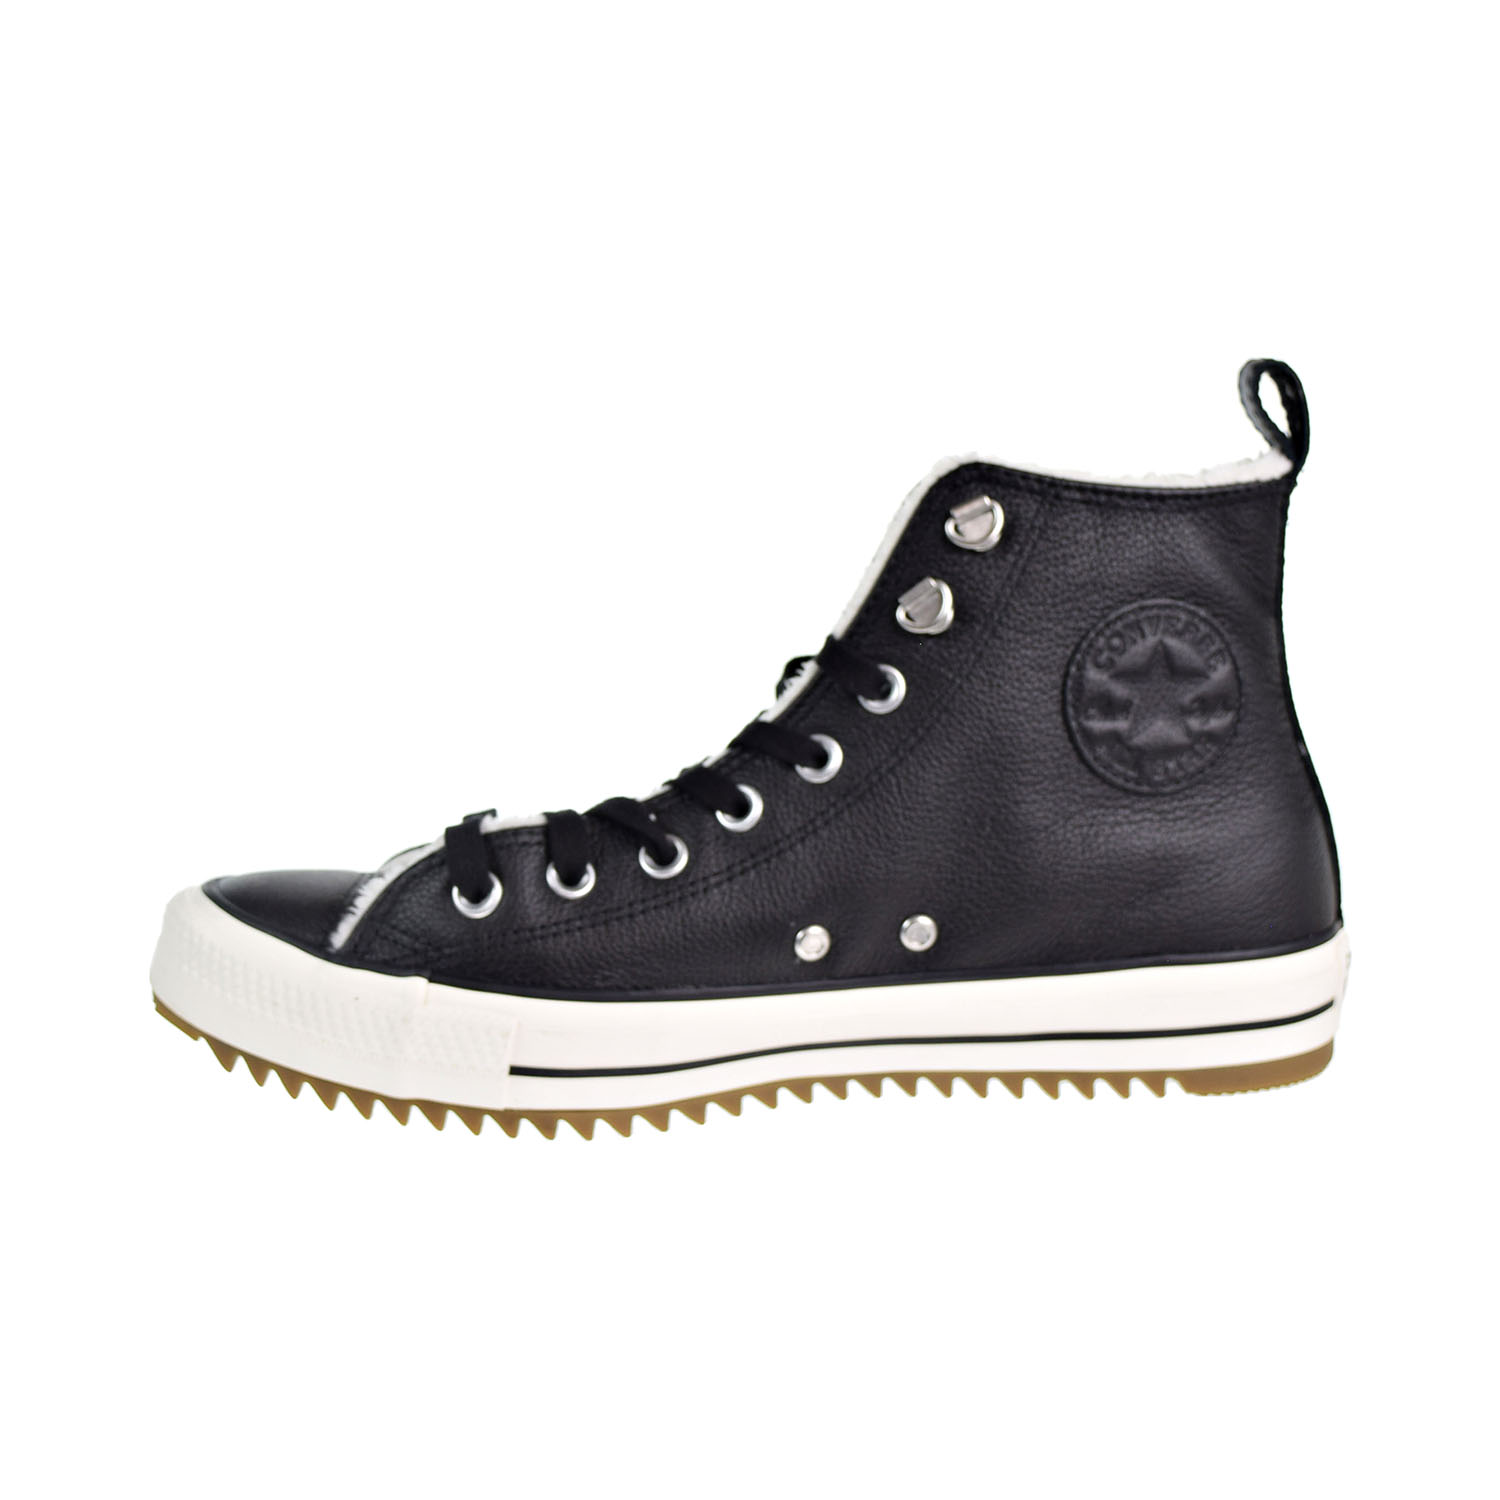 Converse Chuck Taylor All Star Hiker Boot Men's/Big Kids Shoes Black-Egret-Gum 161512c - image 4 of 6